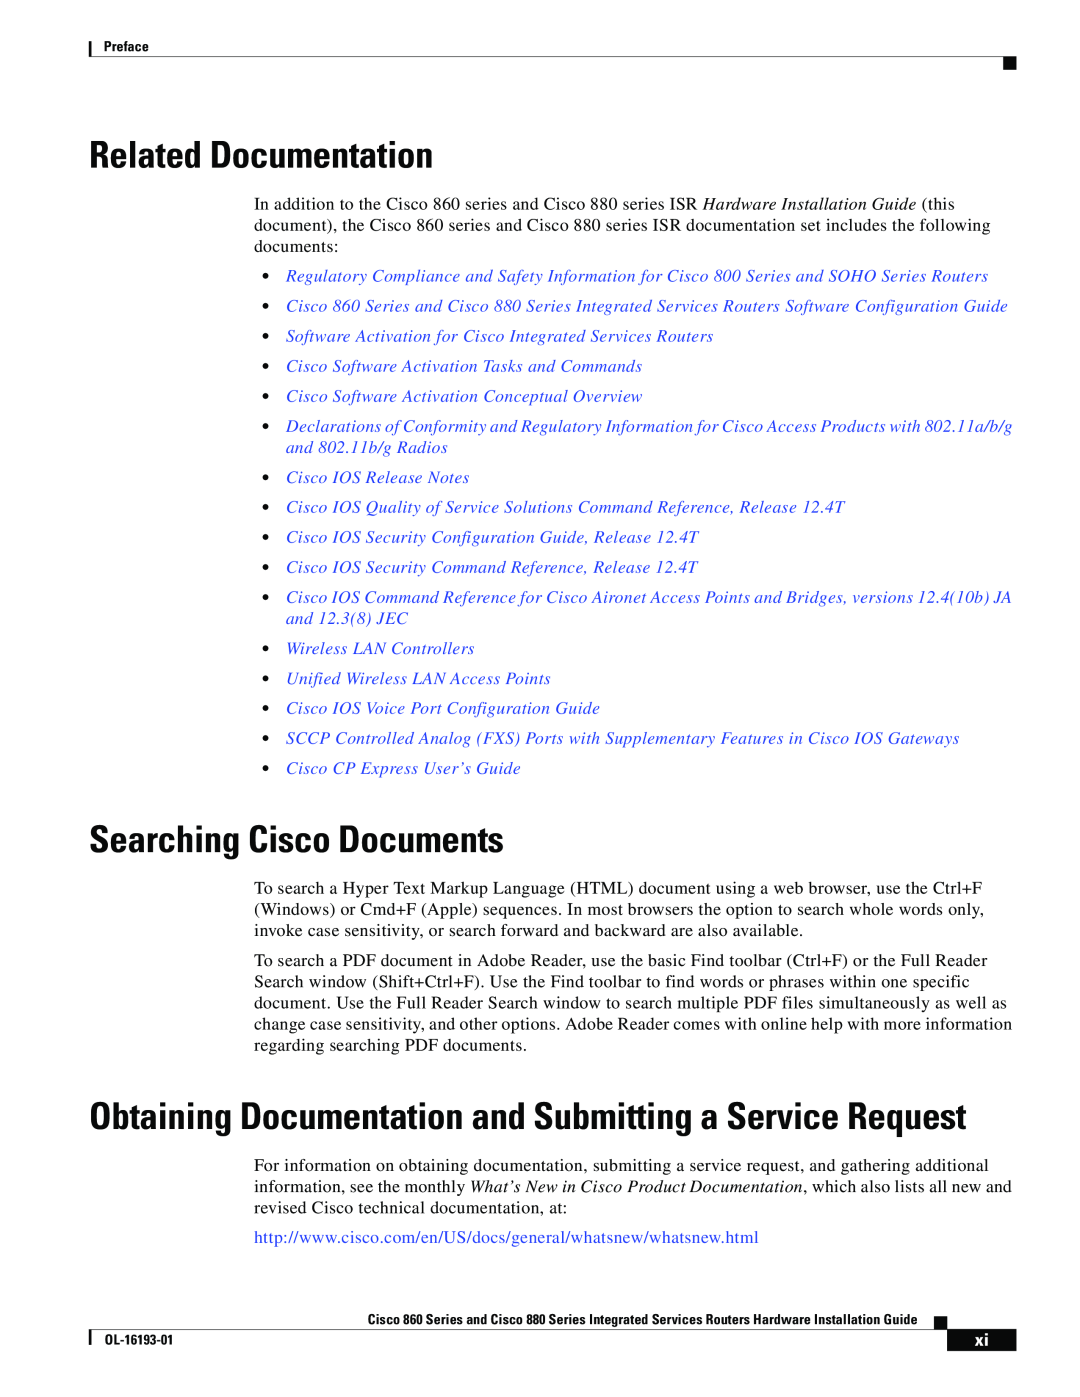 Cisco Systems HIG880, C892FSPK9, 861WGNPK9RF, 860 manual Related Documentation, Searching Cisco Documents 